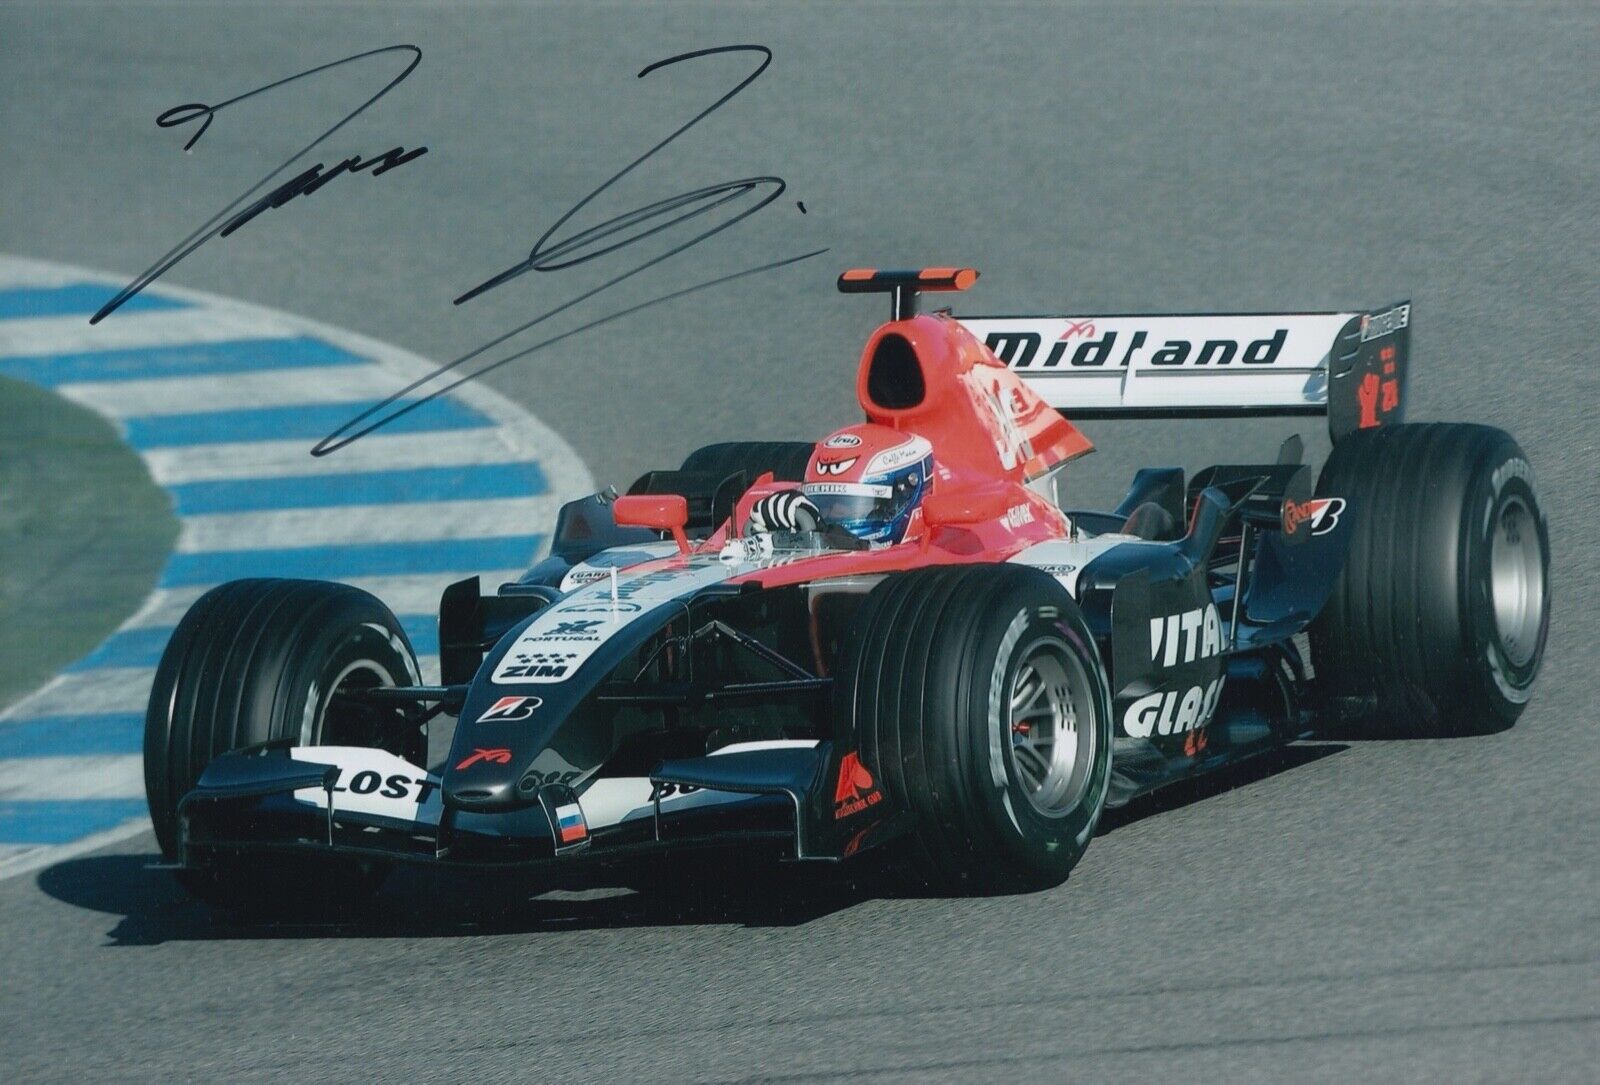 Thomas Biagi Hand Signed 12x8 Photo Poster painting F1 Autograph Midland F1 2